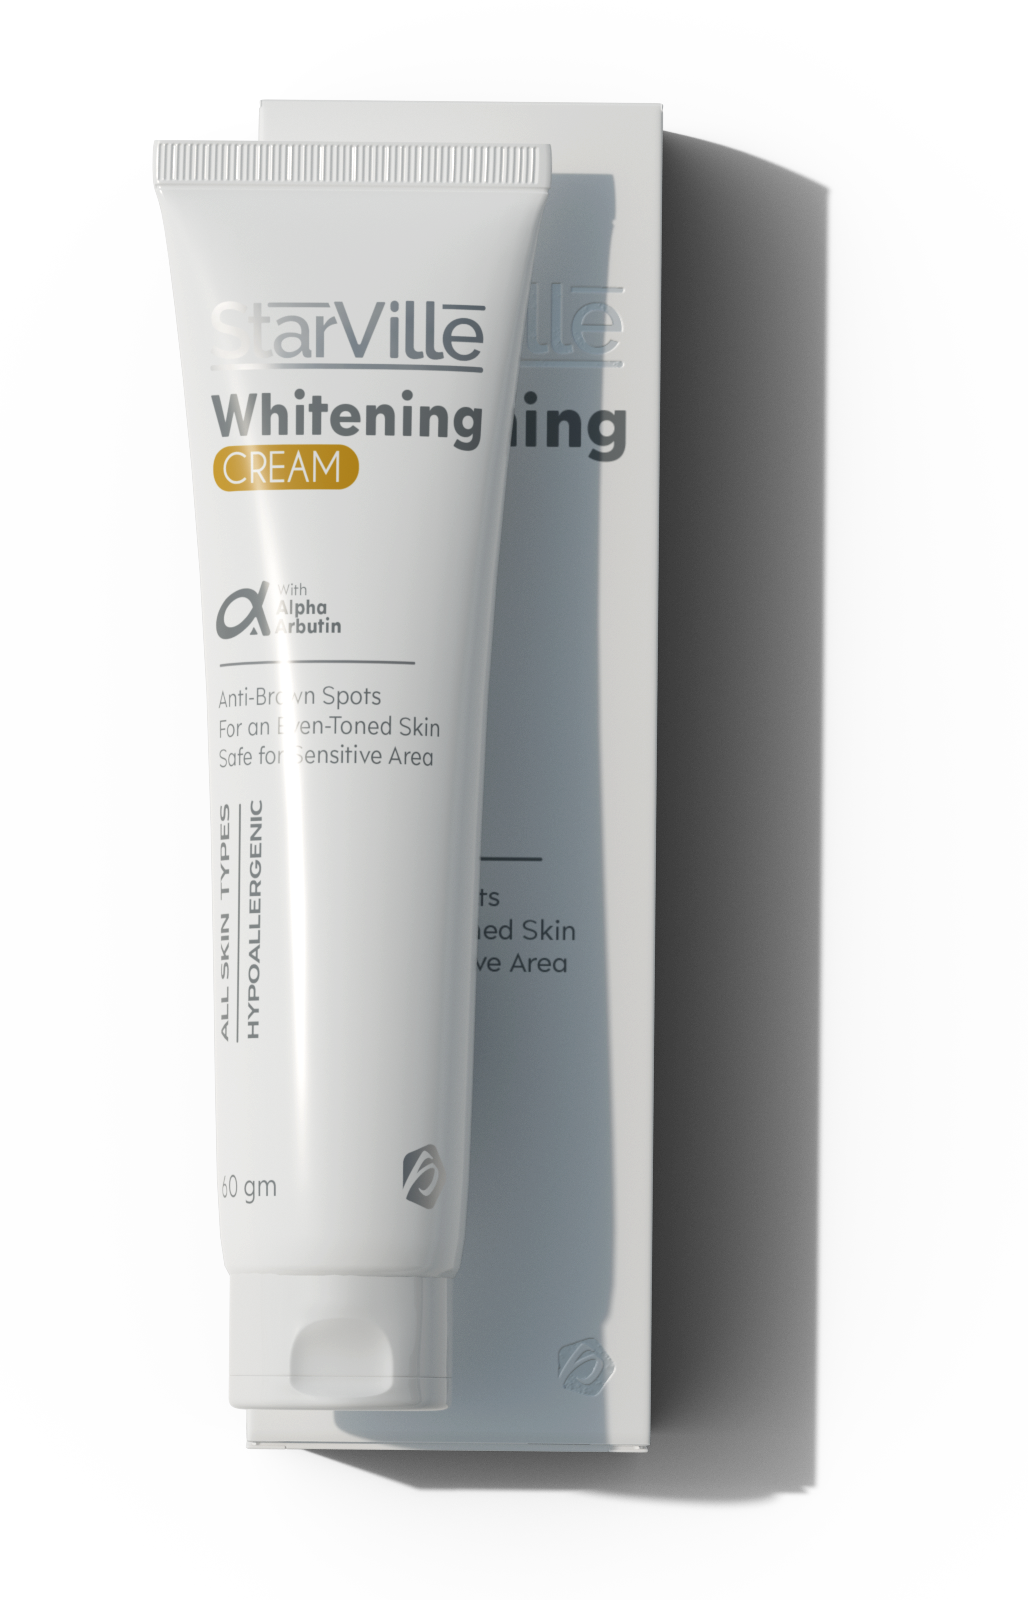 Starville Whitening Cream 60 gm